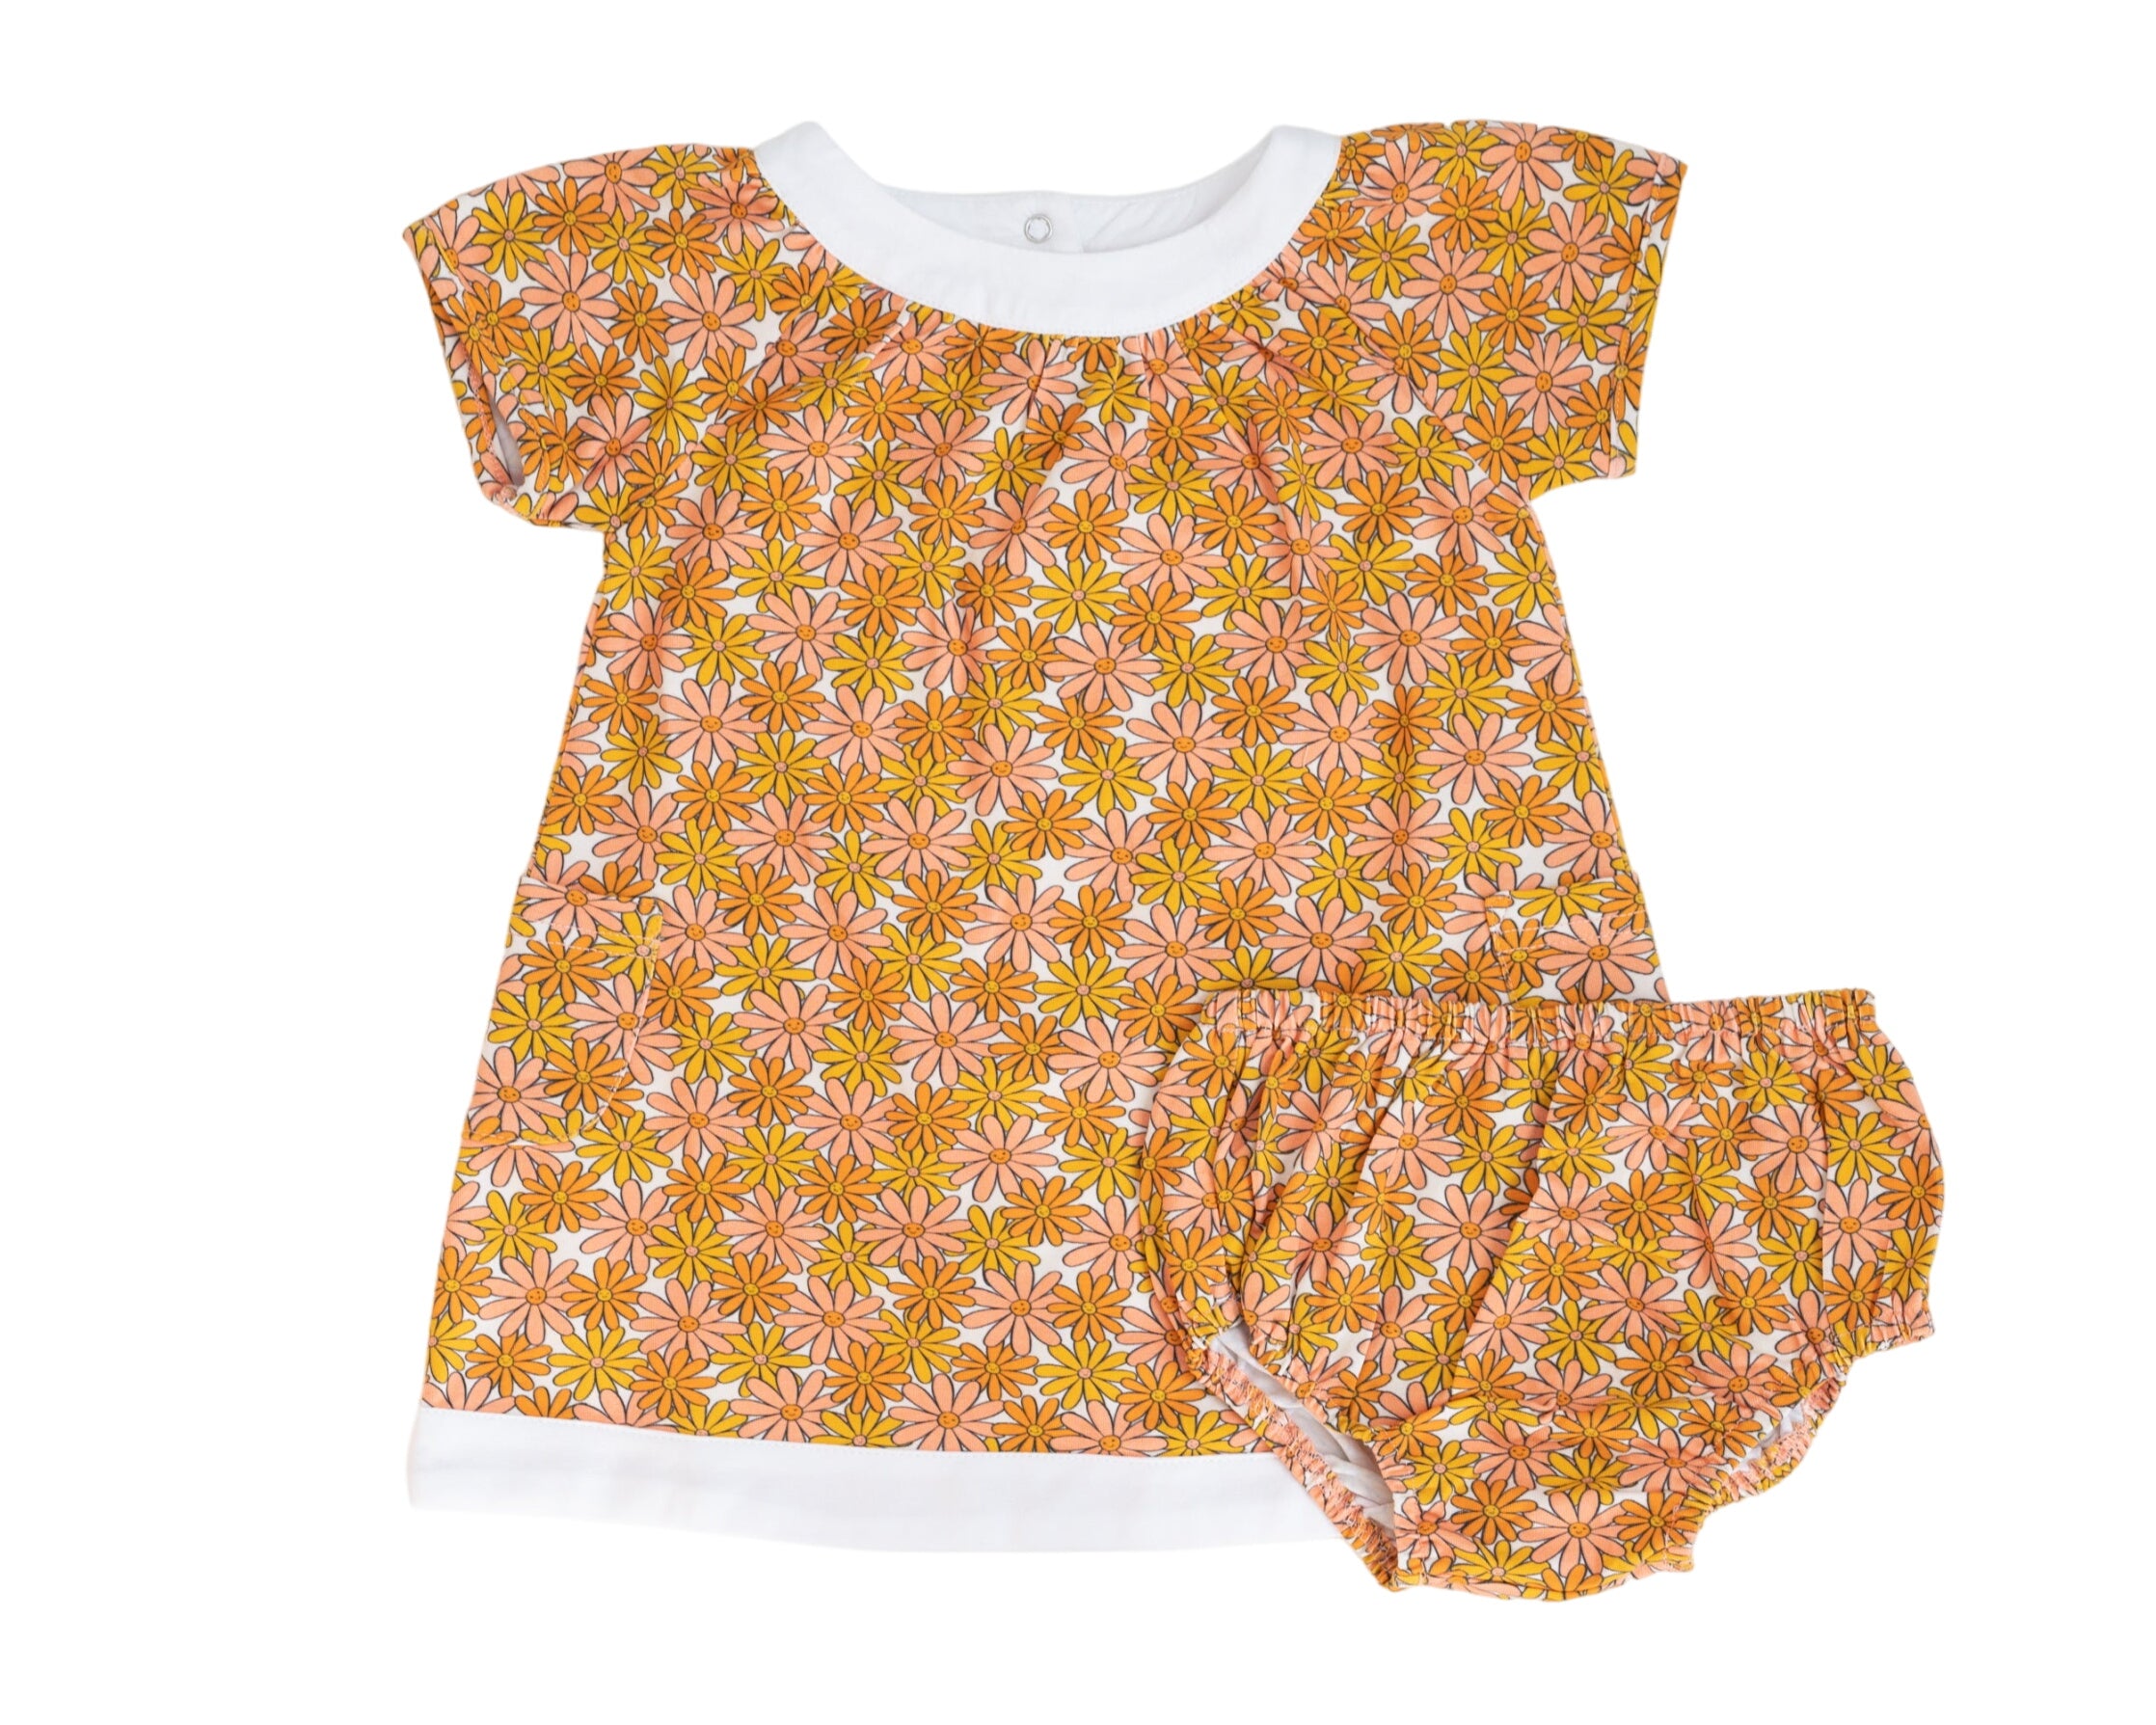 Smiley Daisy Dress For Baby Toddler Girls